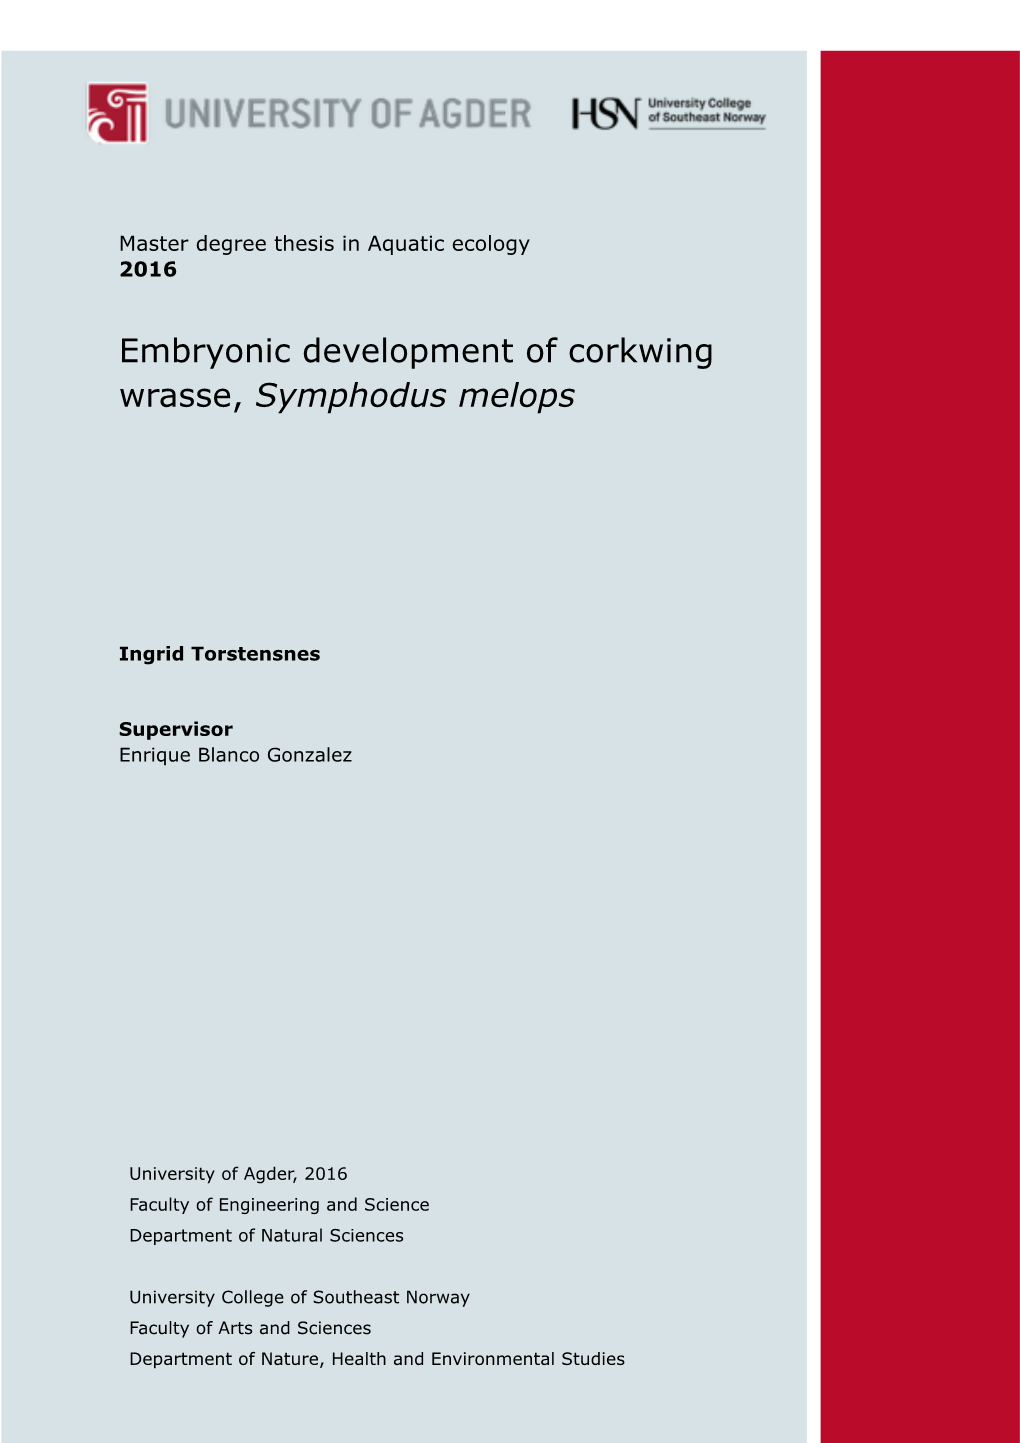 Embryonic Development of Corkwing Wrasse, Symphodus Melops